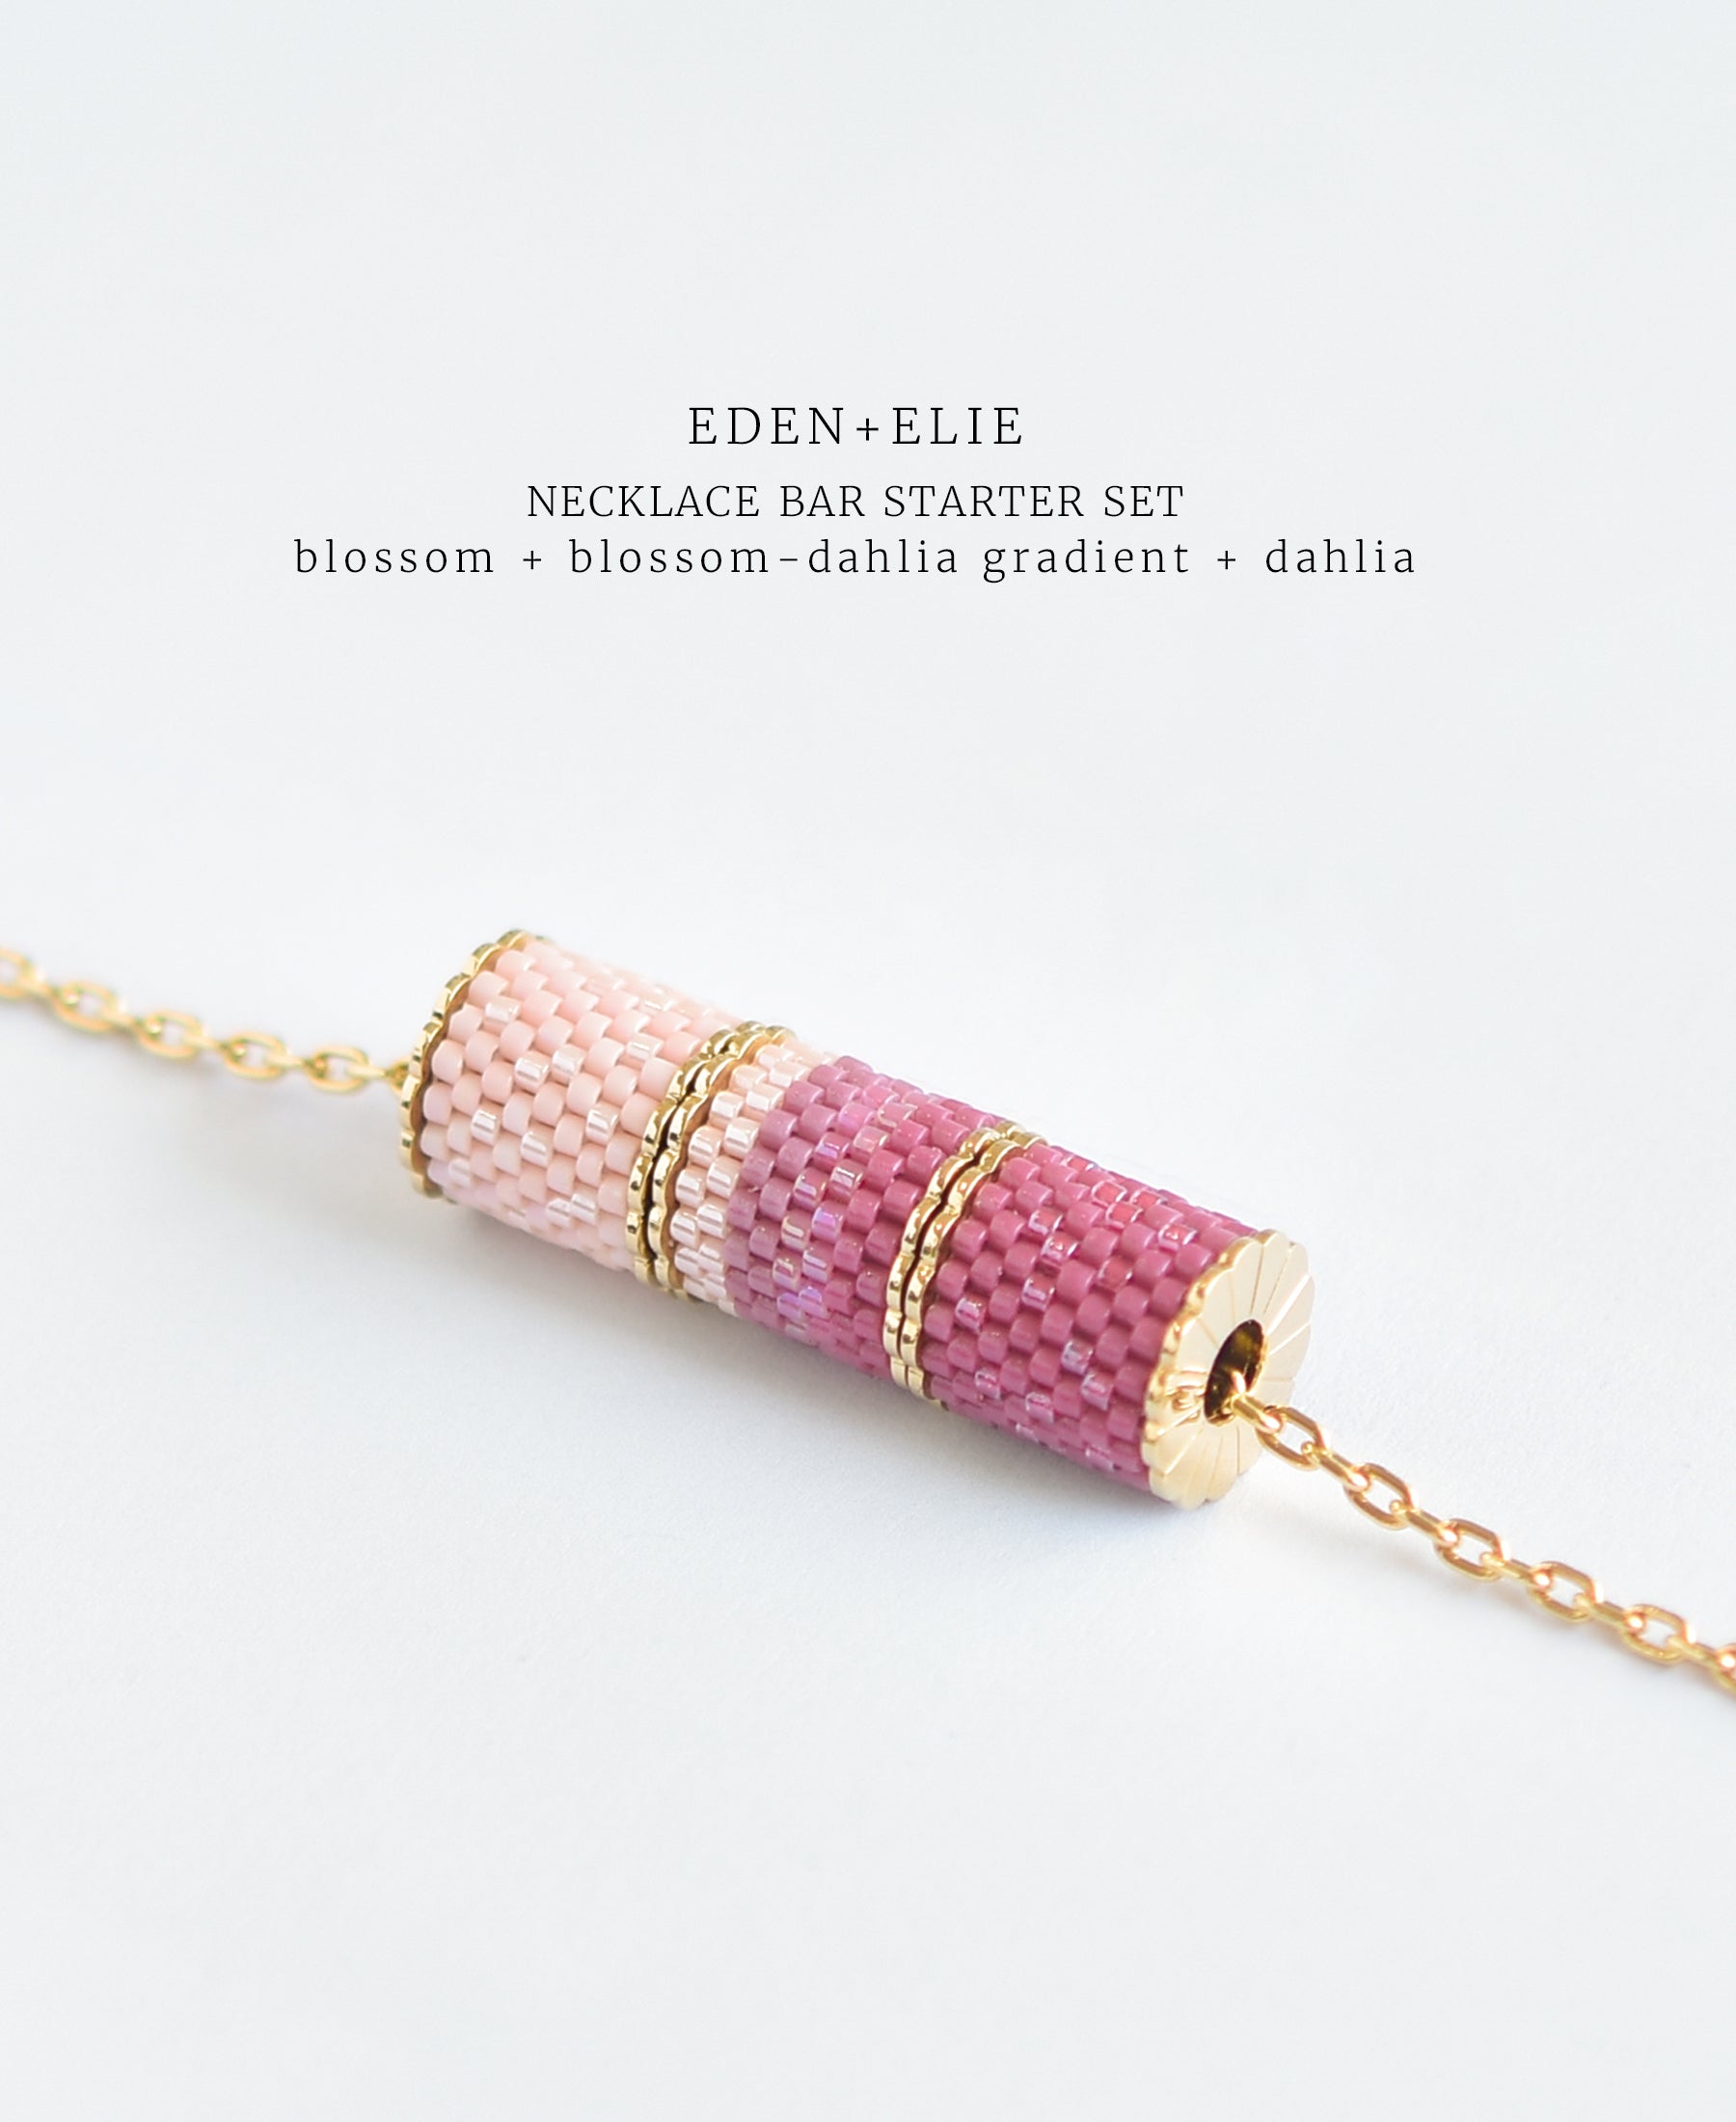 EDEN + ELIE Necklace Bar 3 bead starter set - blossom dahlia gradient